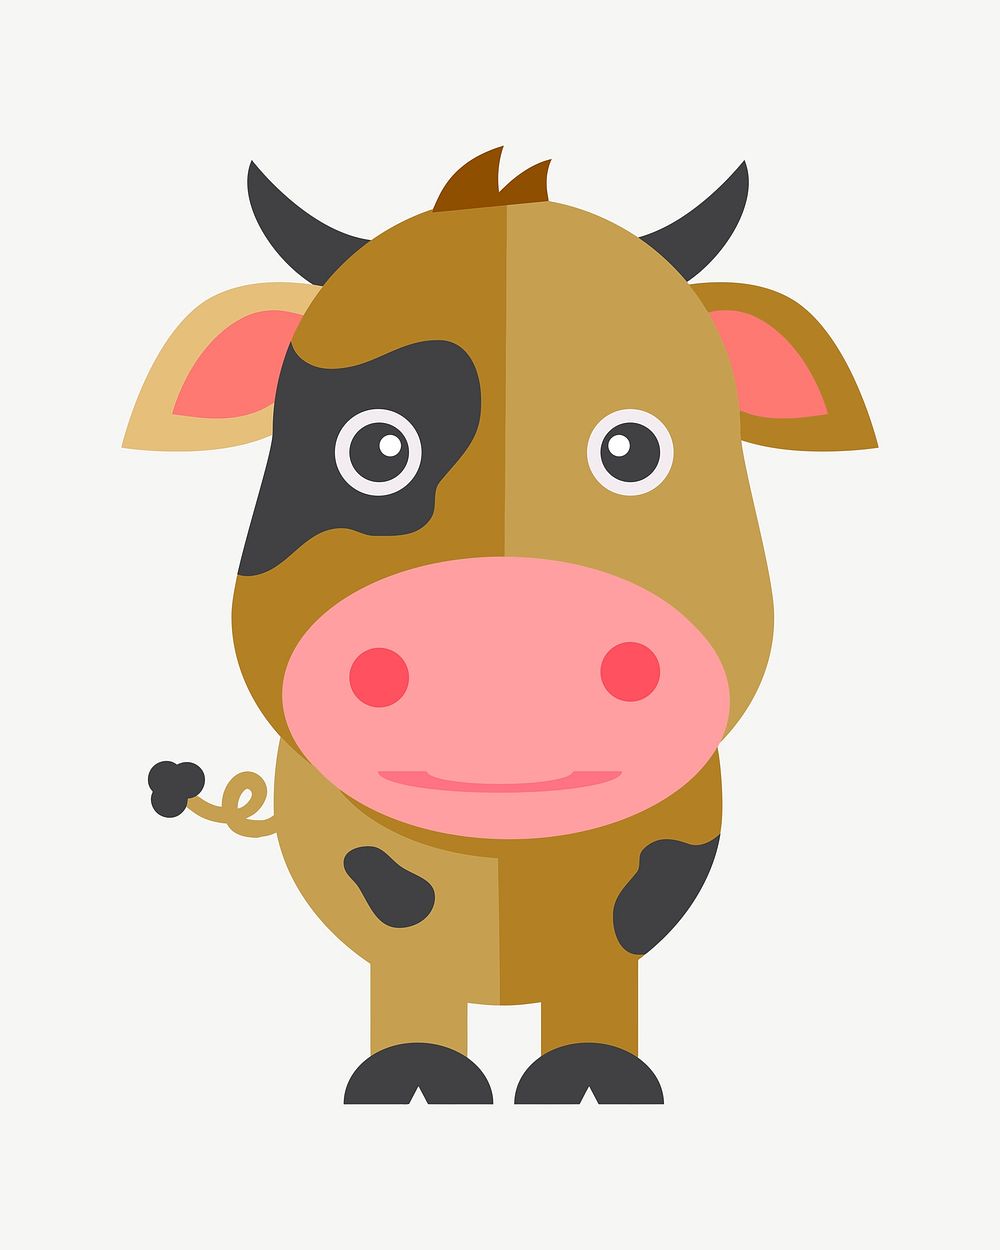 Cow illustration vector. Free public domain CC0 image.